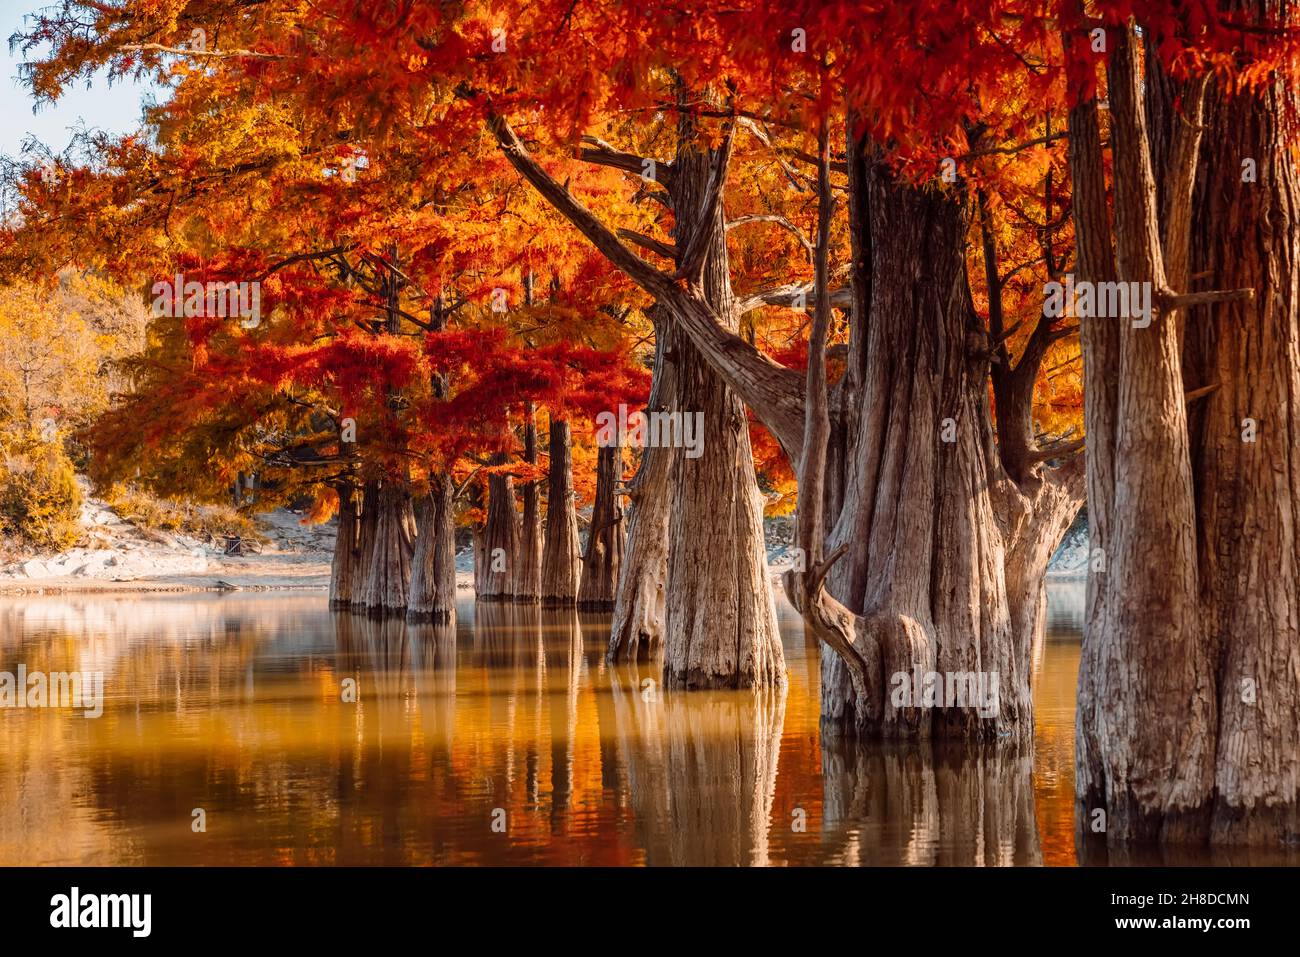 Taxodium with orange needles. Autumnal swamp cypresses and lake. Stock Photo